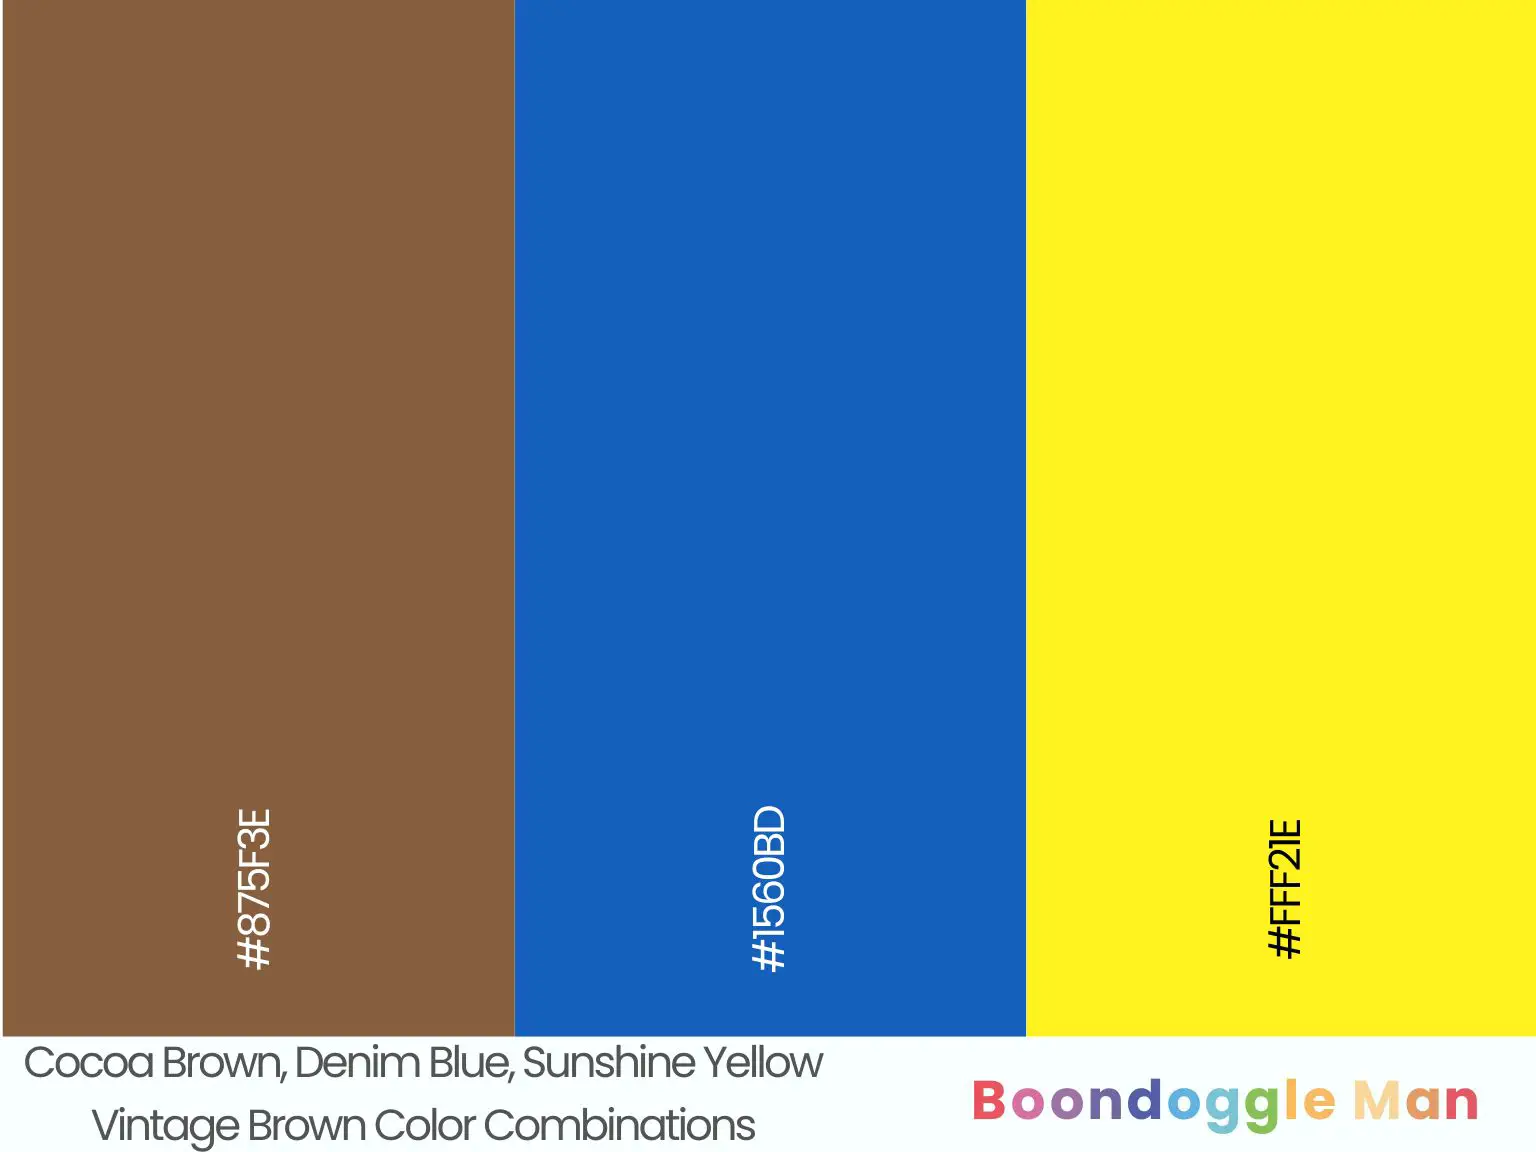 Cocoa Brown, Denim Blue, Sunshine Yellow